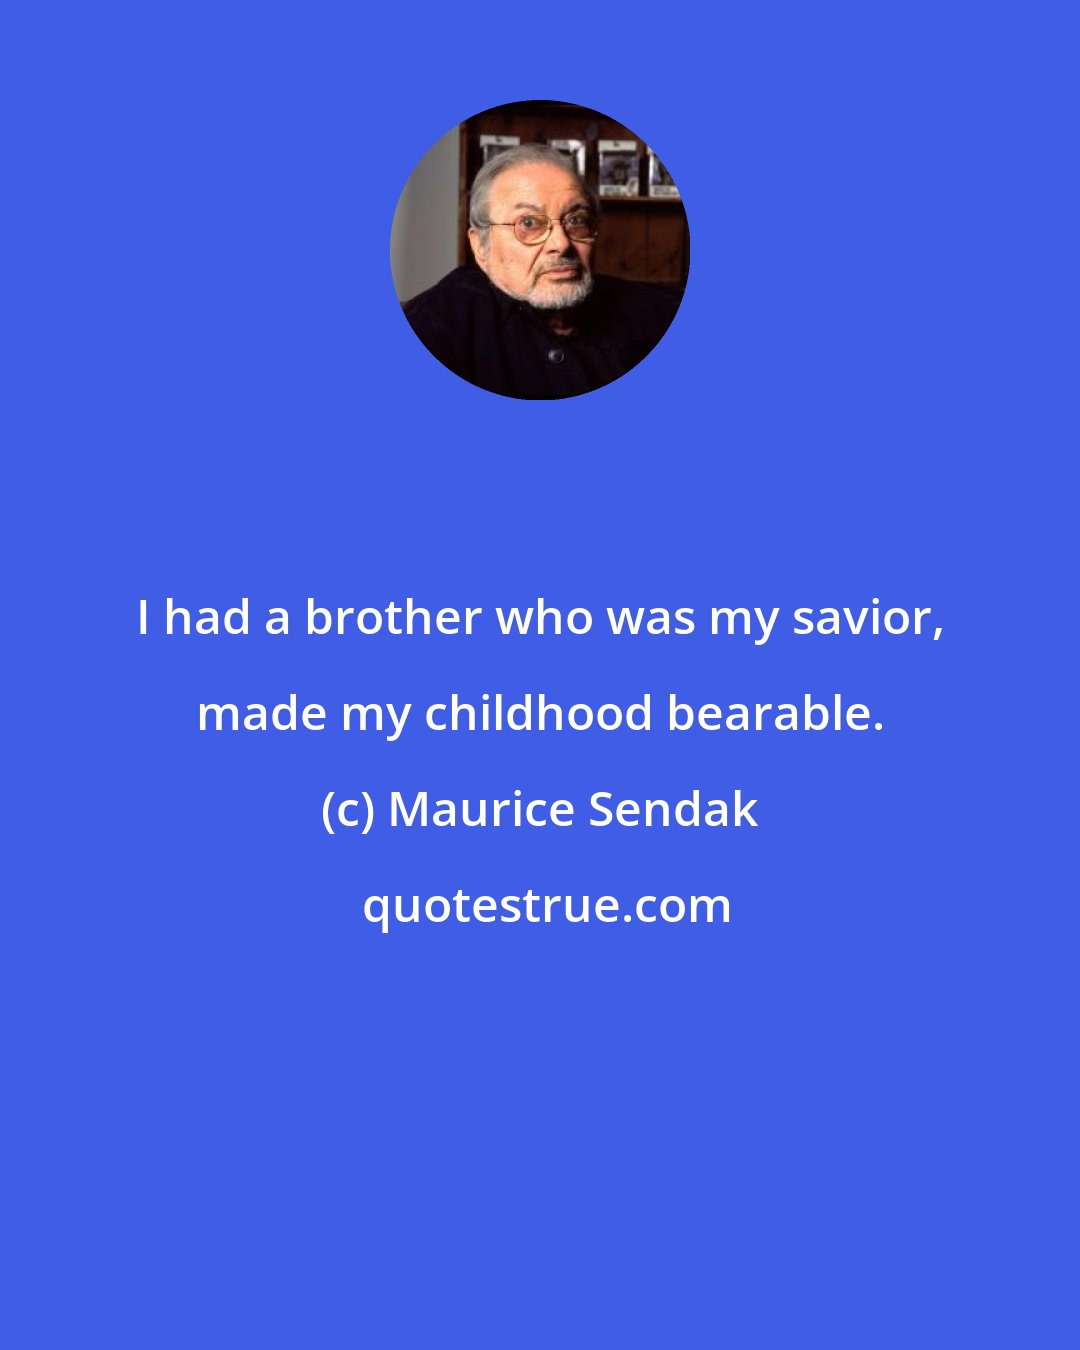 Maurice Sendak: I had a brother who was my savior, made my childhood bearable.